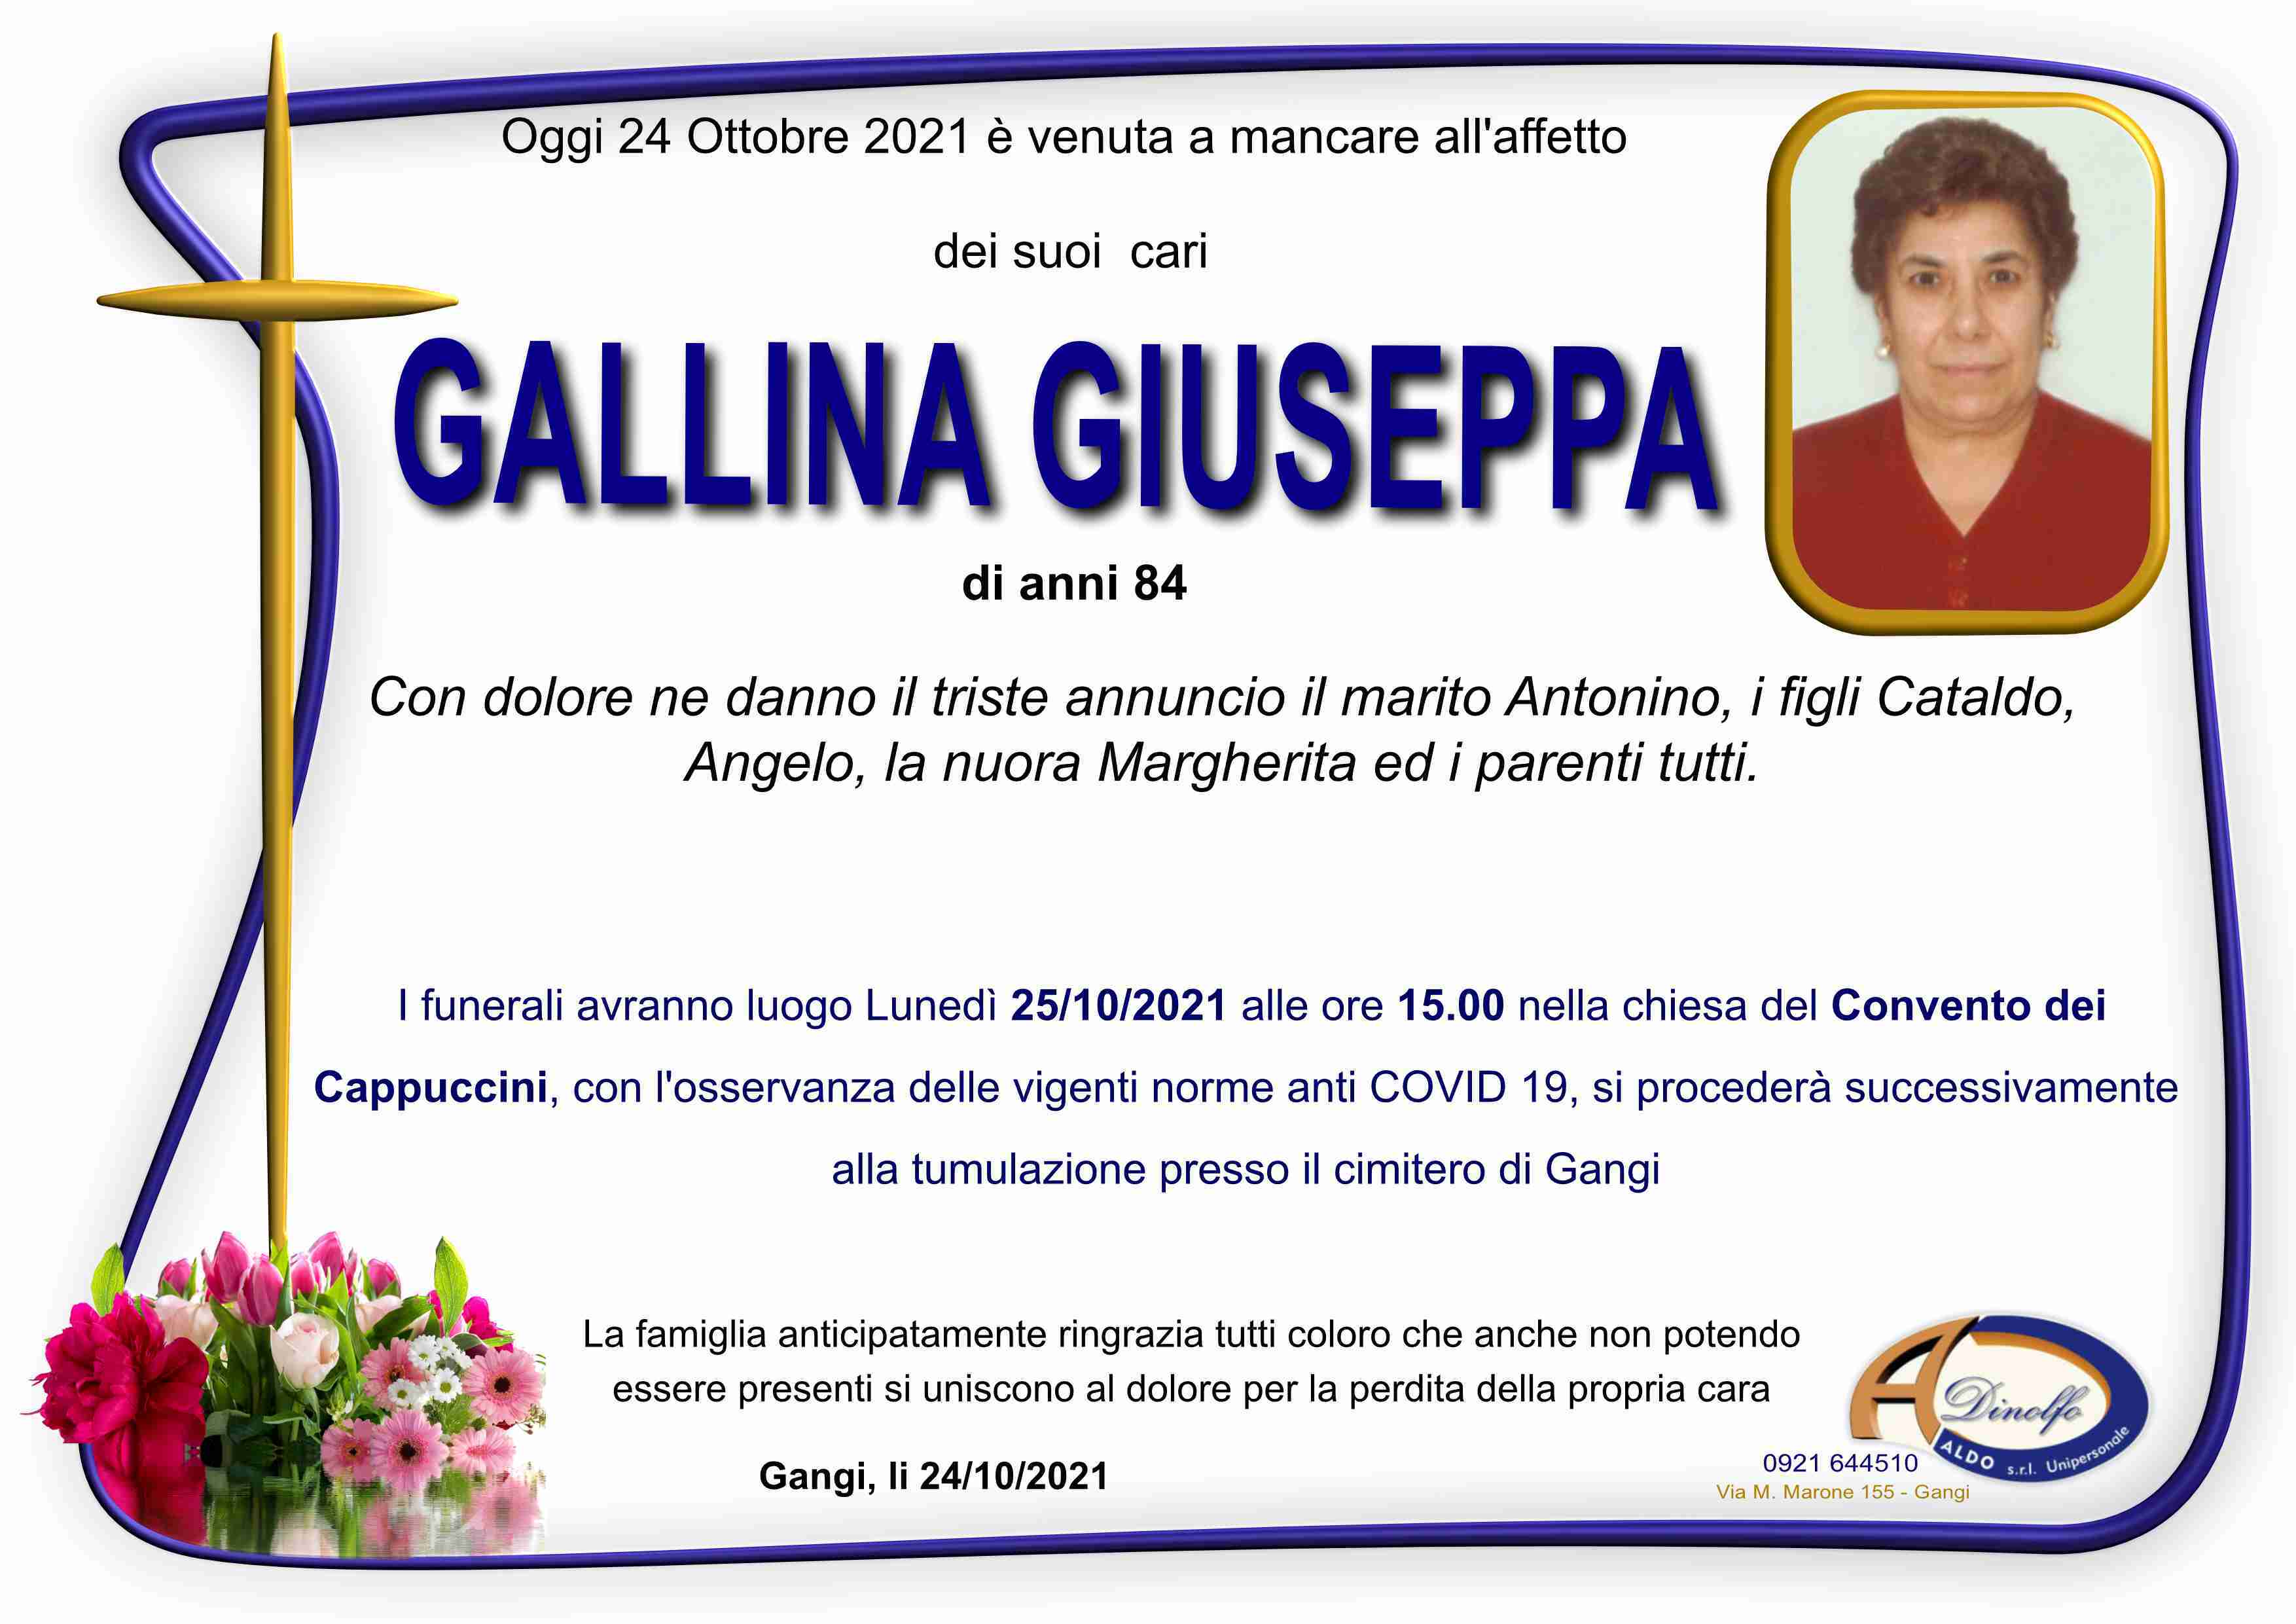 Giuseppa Gallina